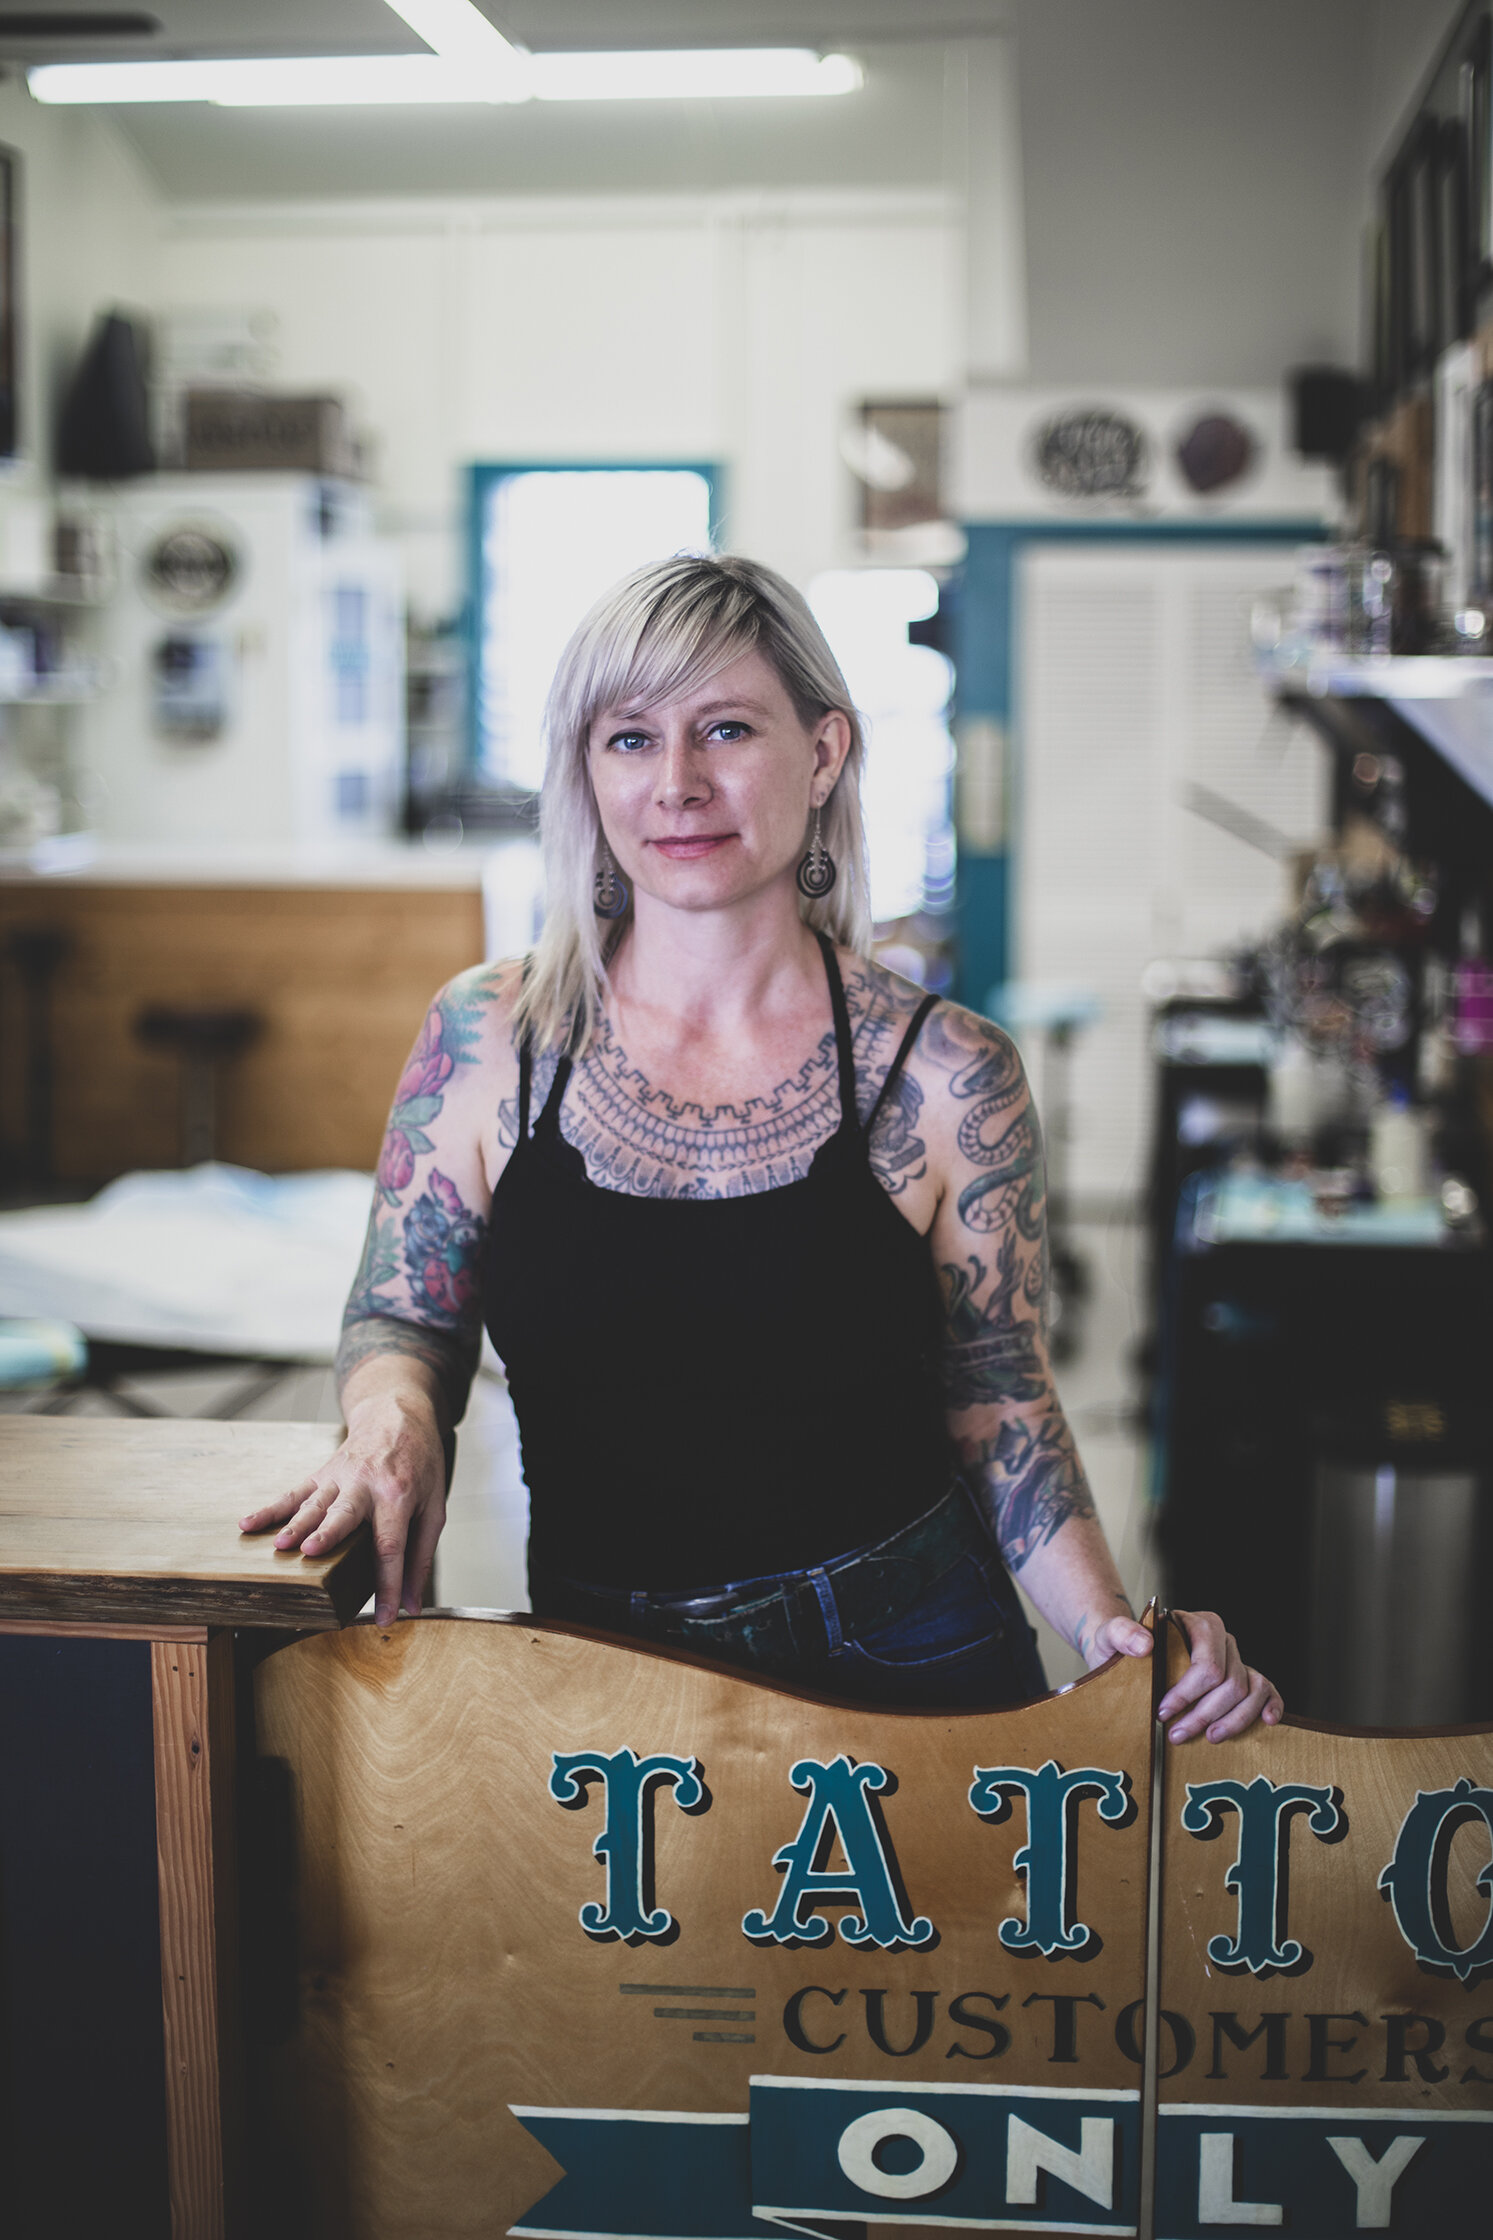 South Seas Tattoo owner Kristin Lowery